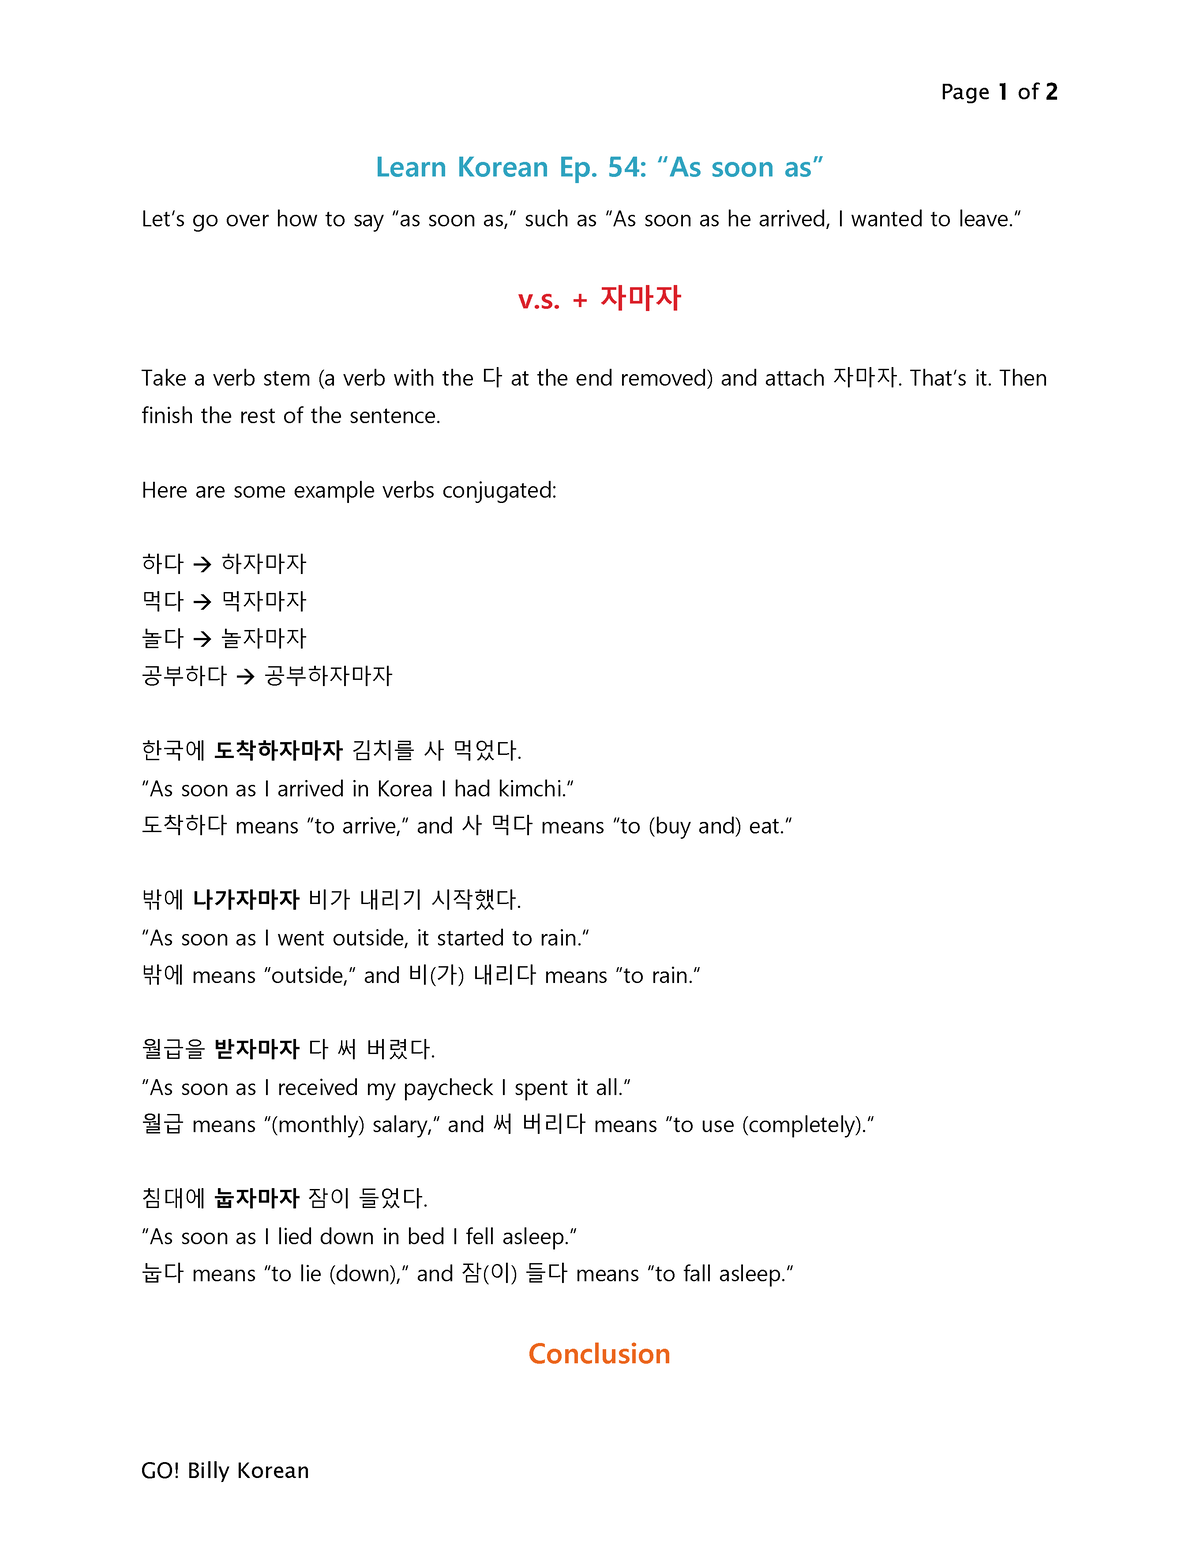 Go Billy Korean Episode 54 - Page 1 of 2 GO! Billy Korean Learn Korean ...